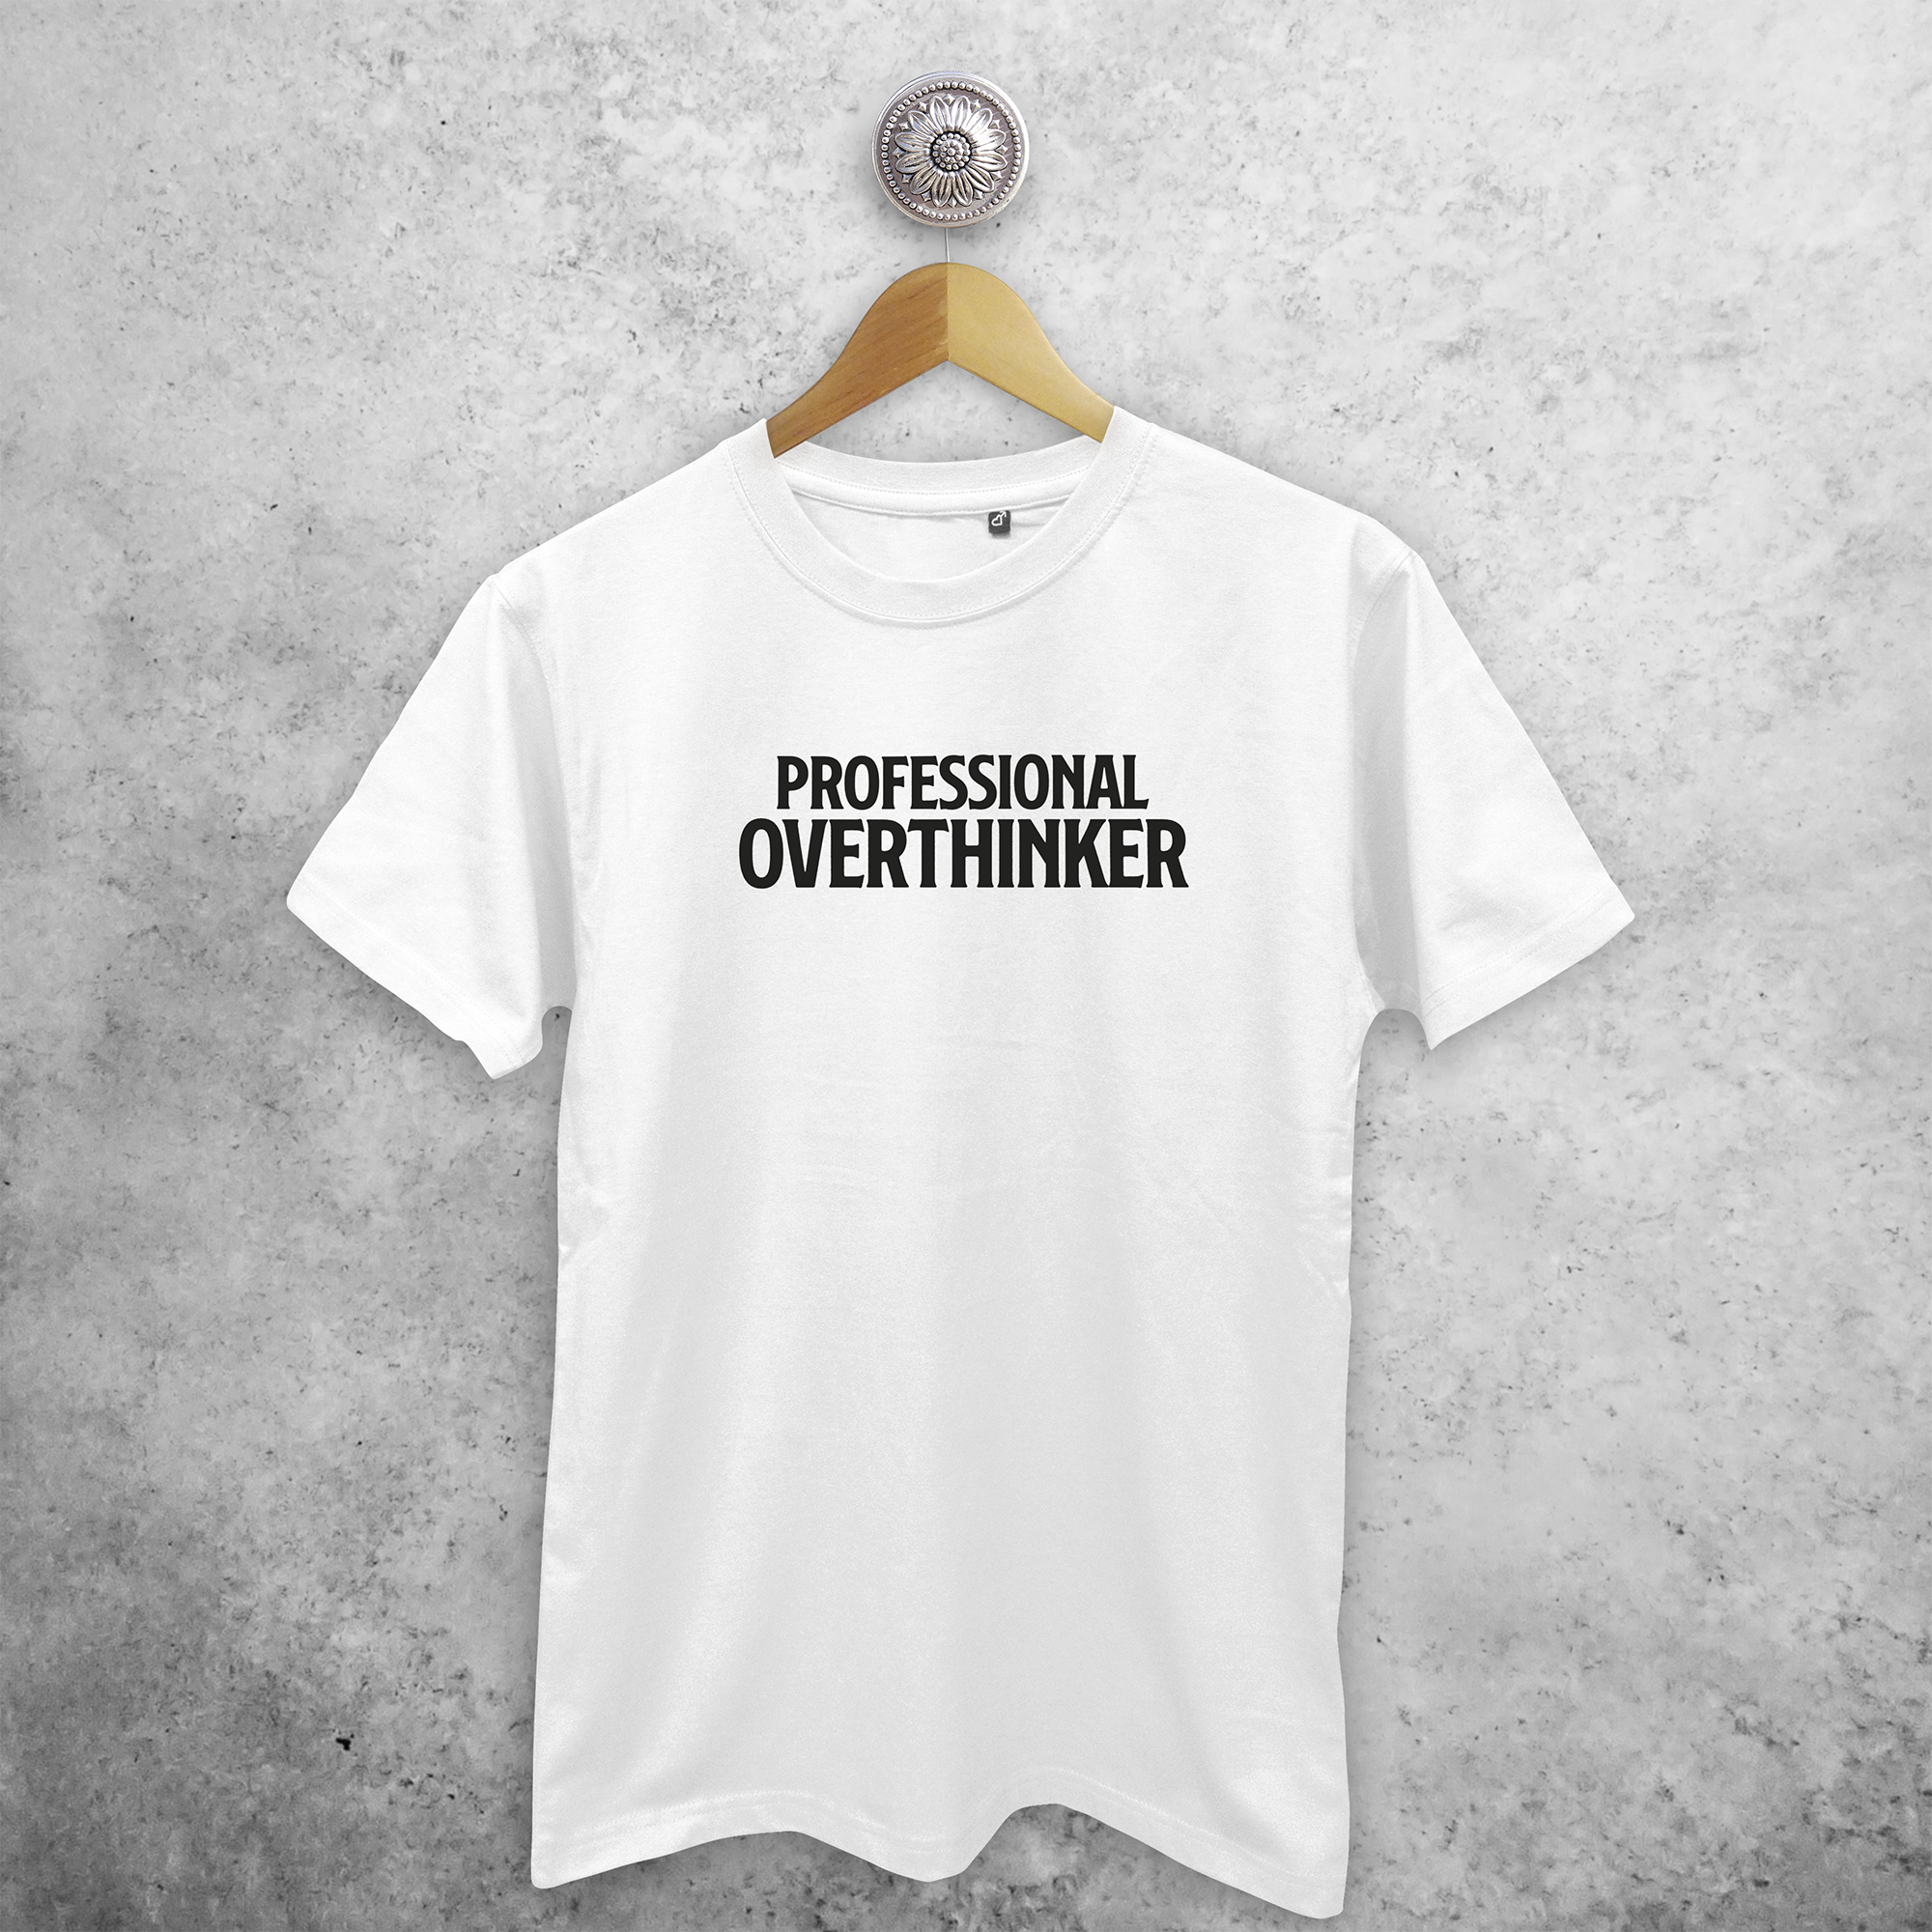 'Professional overthinker' volwassene shirt